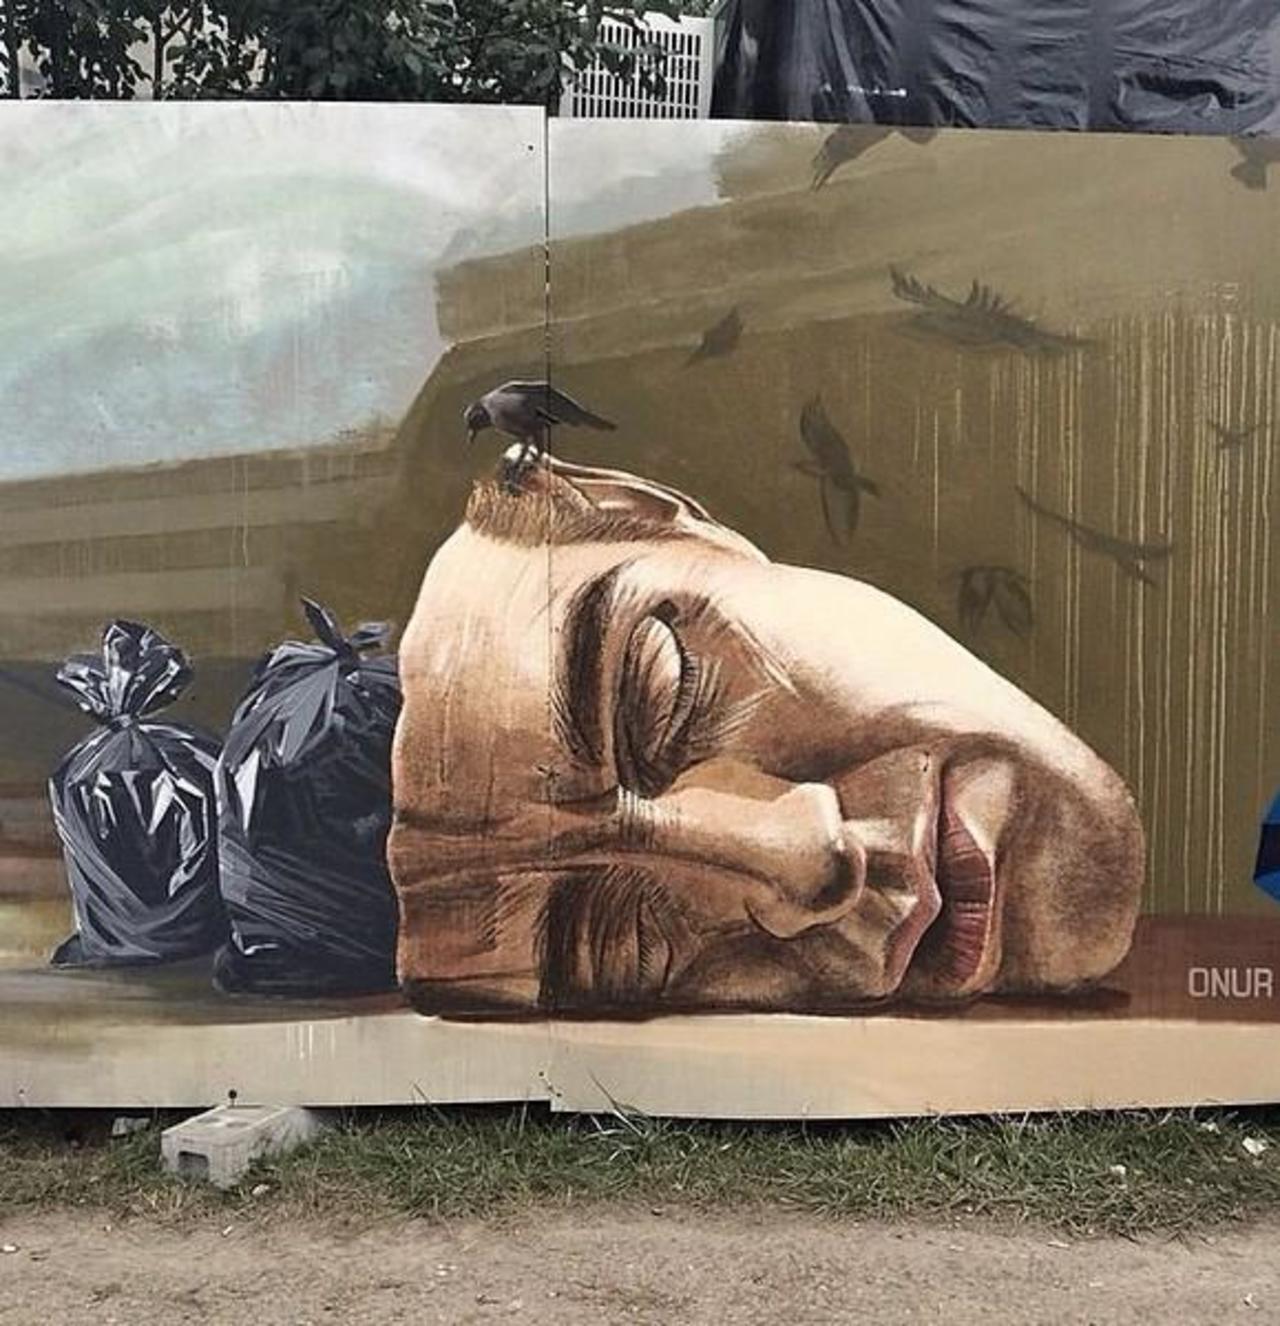 Artist ONUR new Street Art piece located in Biel, Switzerland #art #graffiti #mural #streetart https://t.co/Lo3h5W0V7N